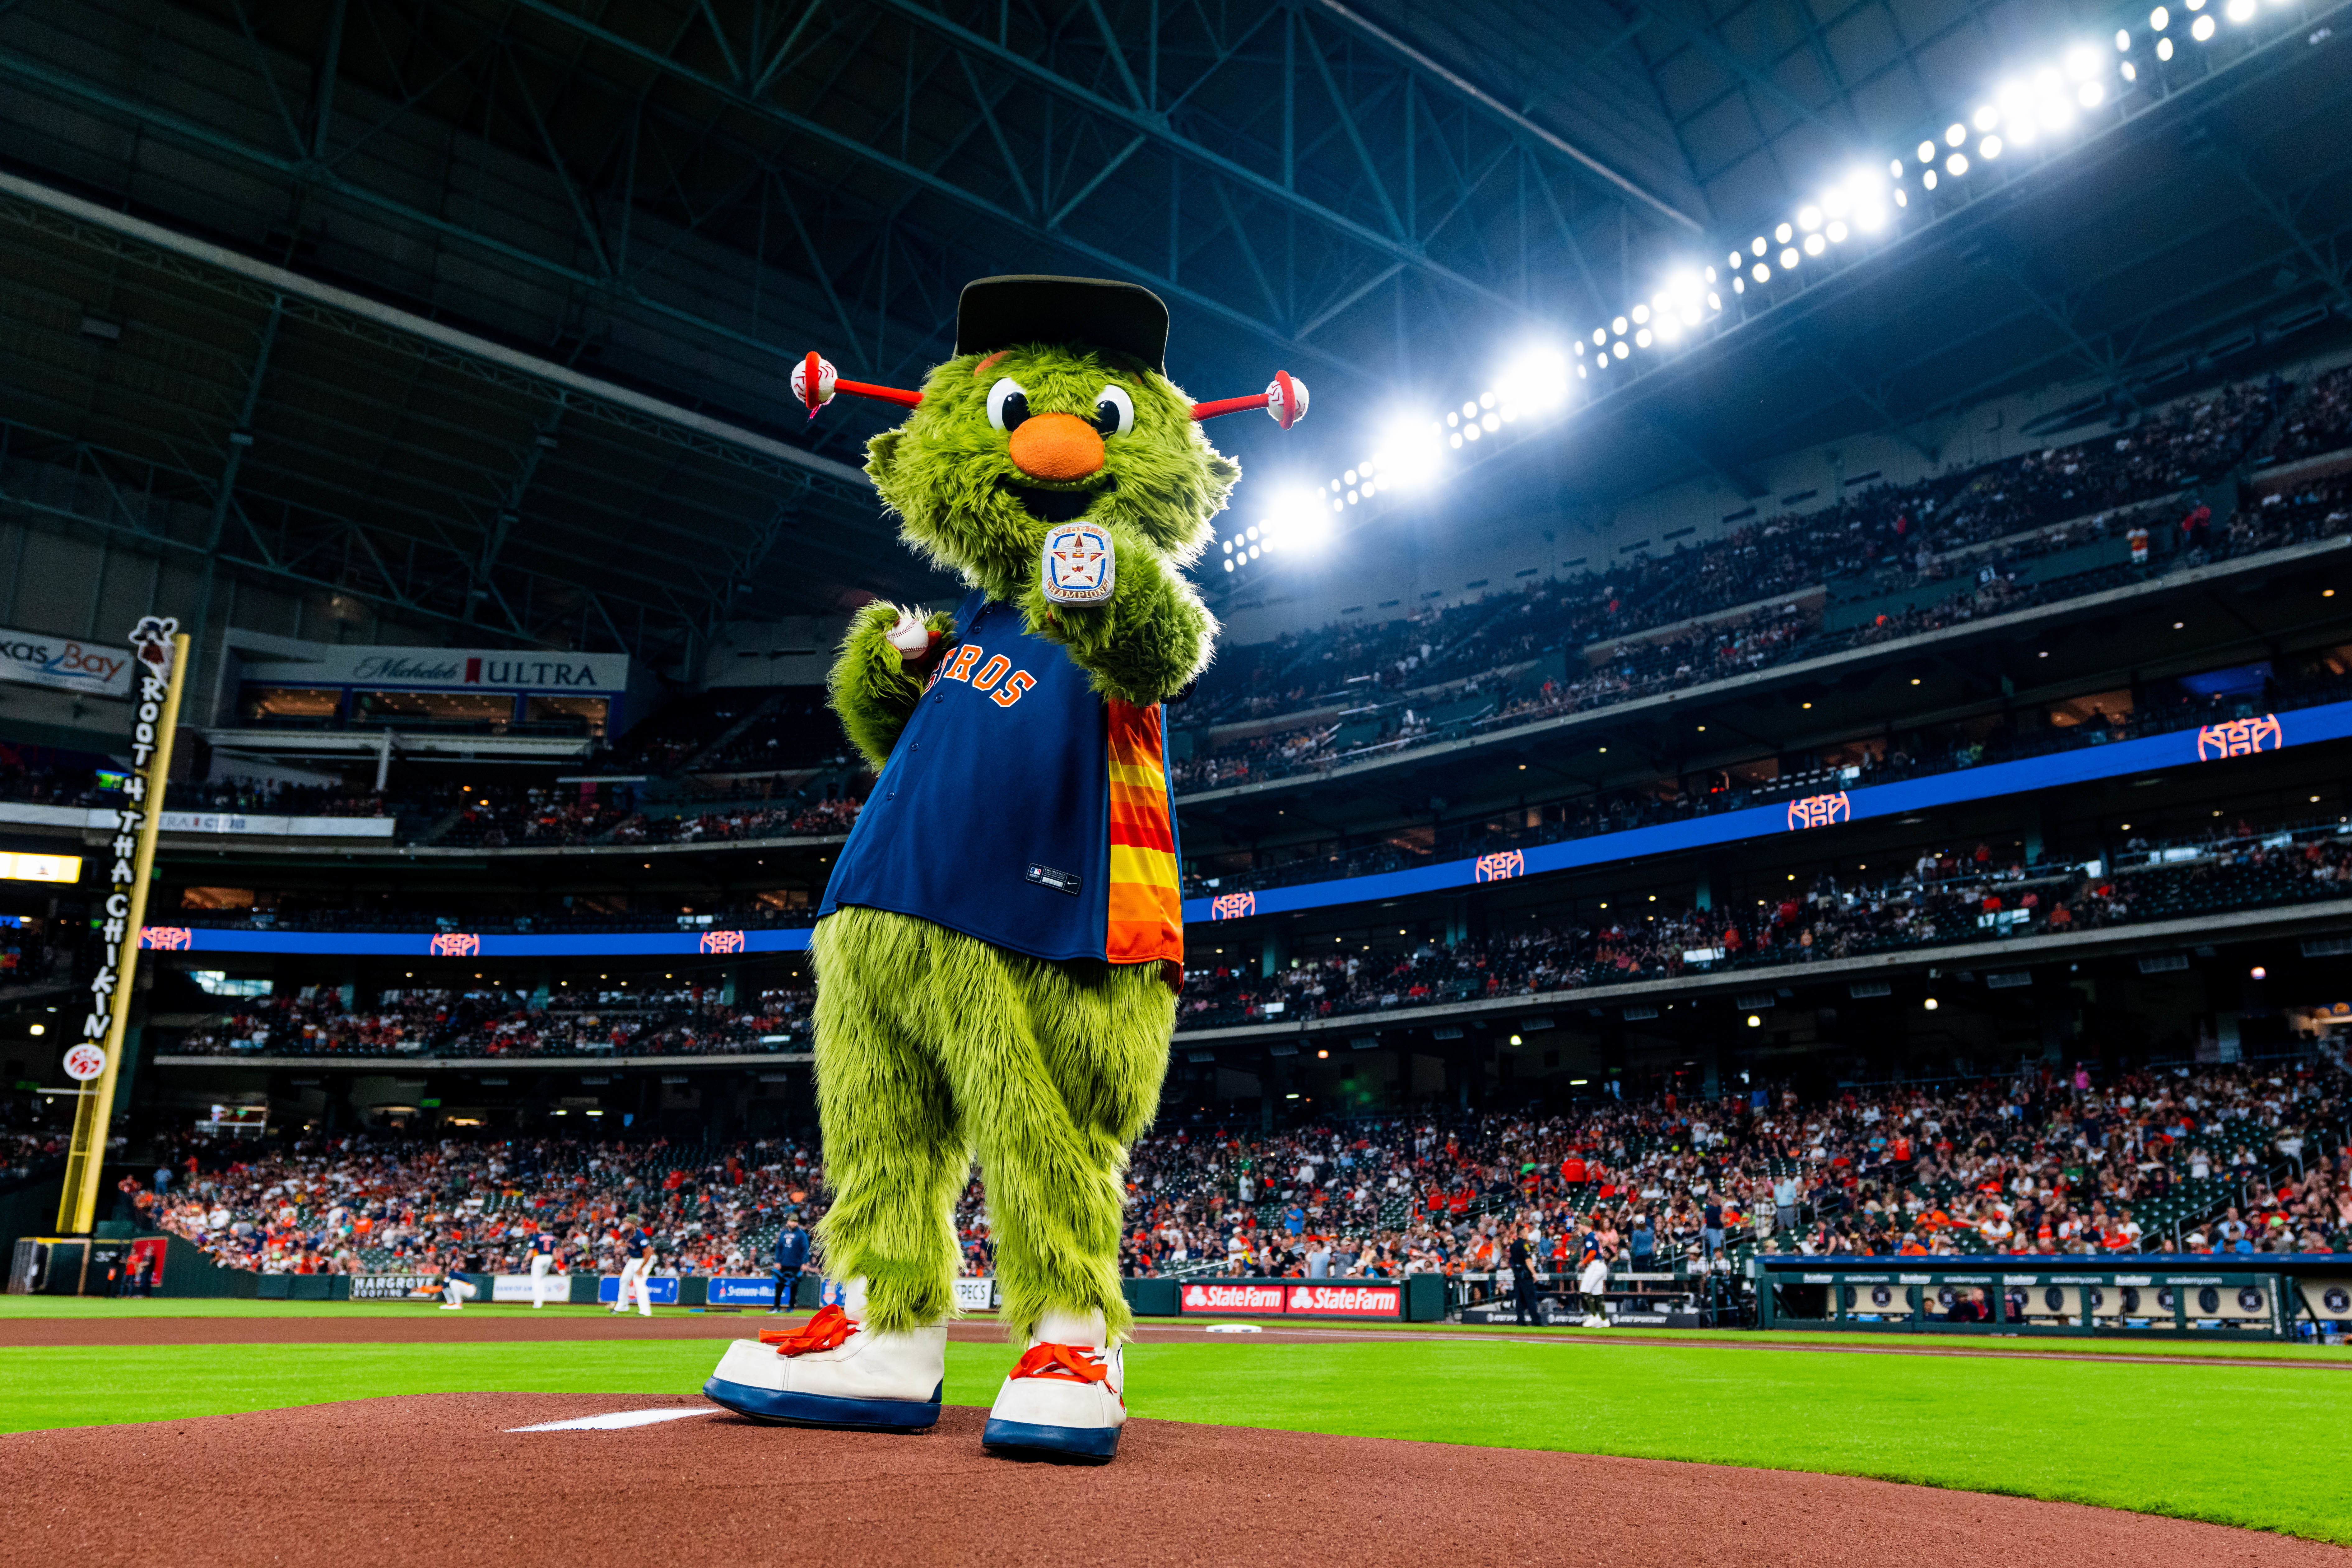 Orbit the Houston Astros mascot